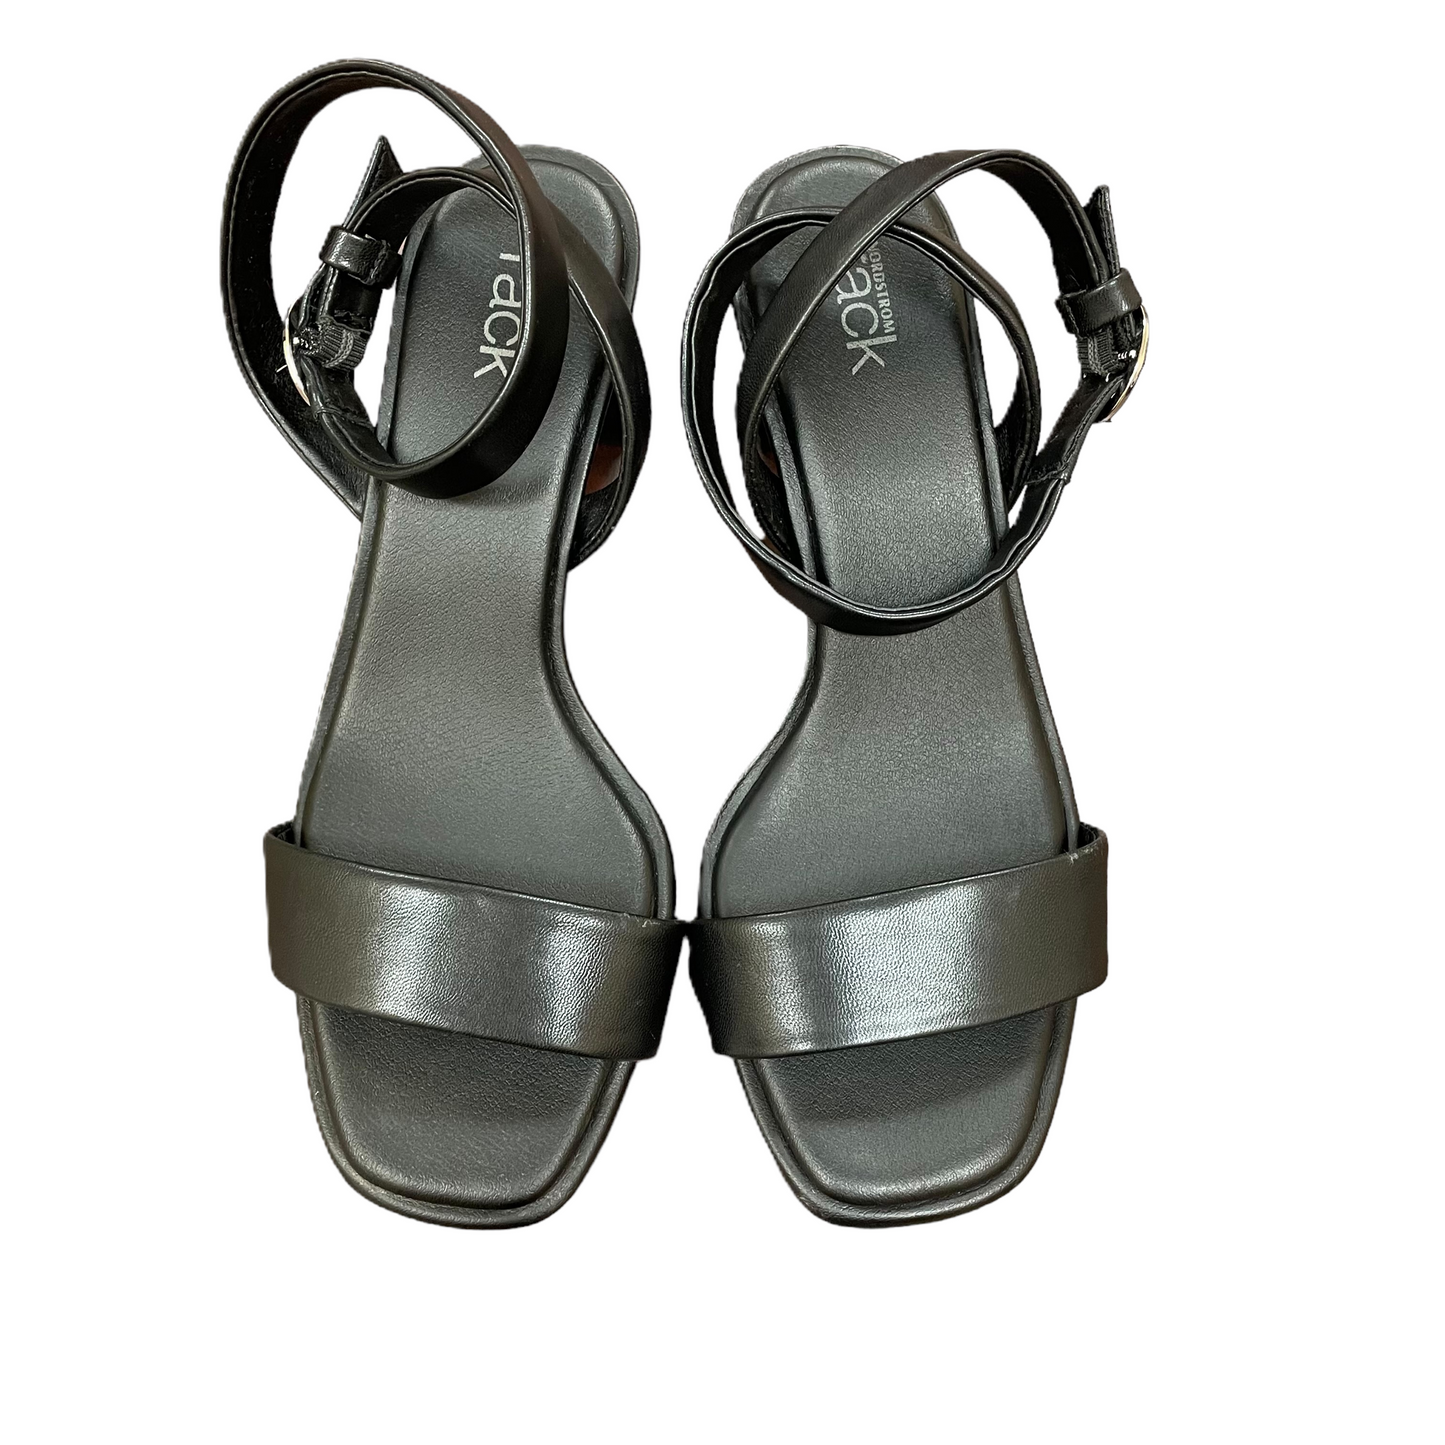 Black Sandals Heels Block By Nordstrom Rack,  Size: 7